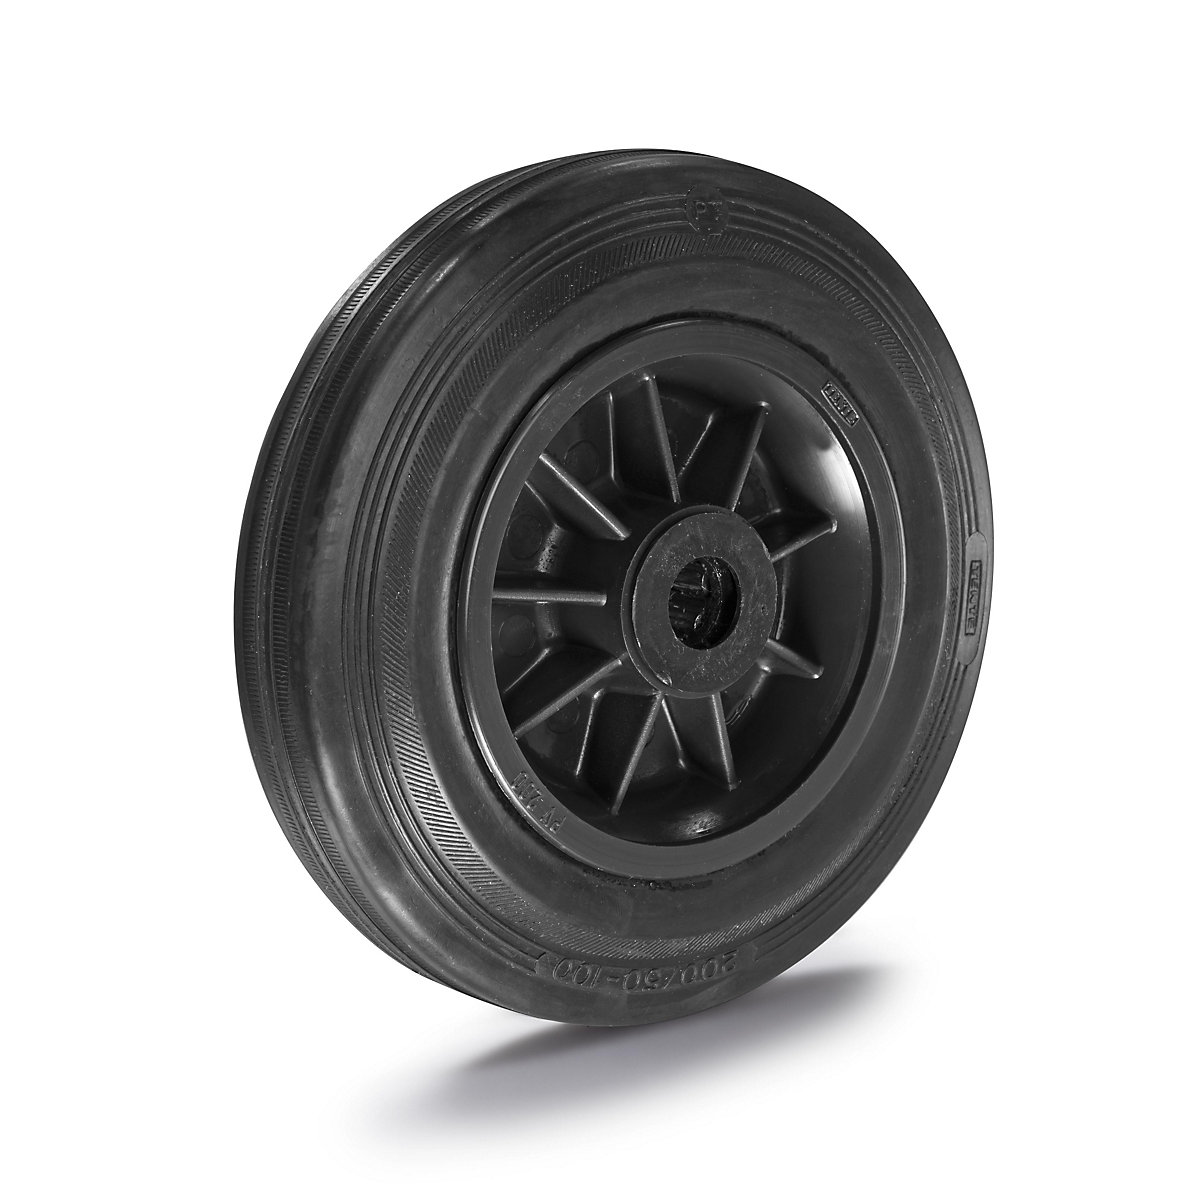 Solid rubber wheel on plastic rim - Proroll